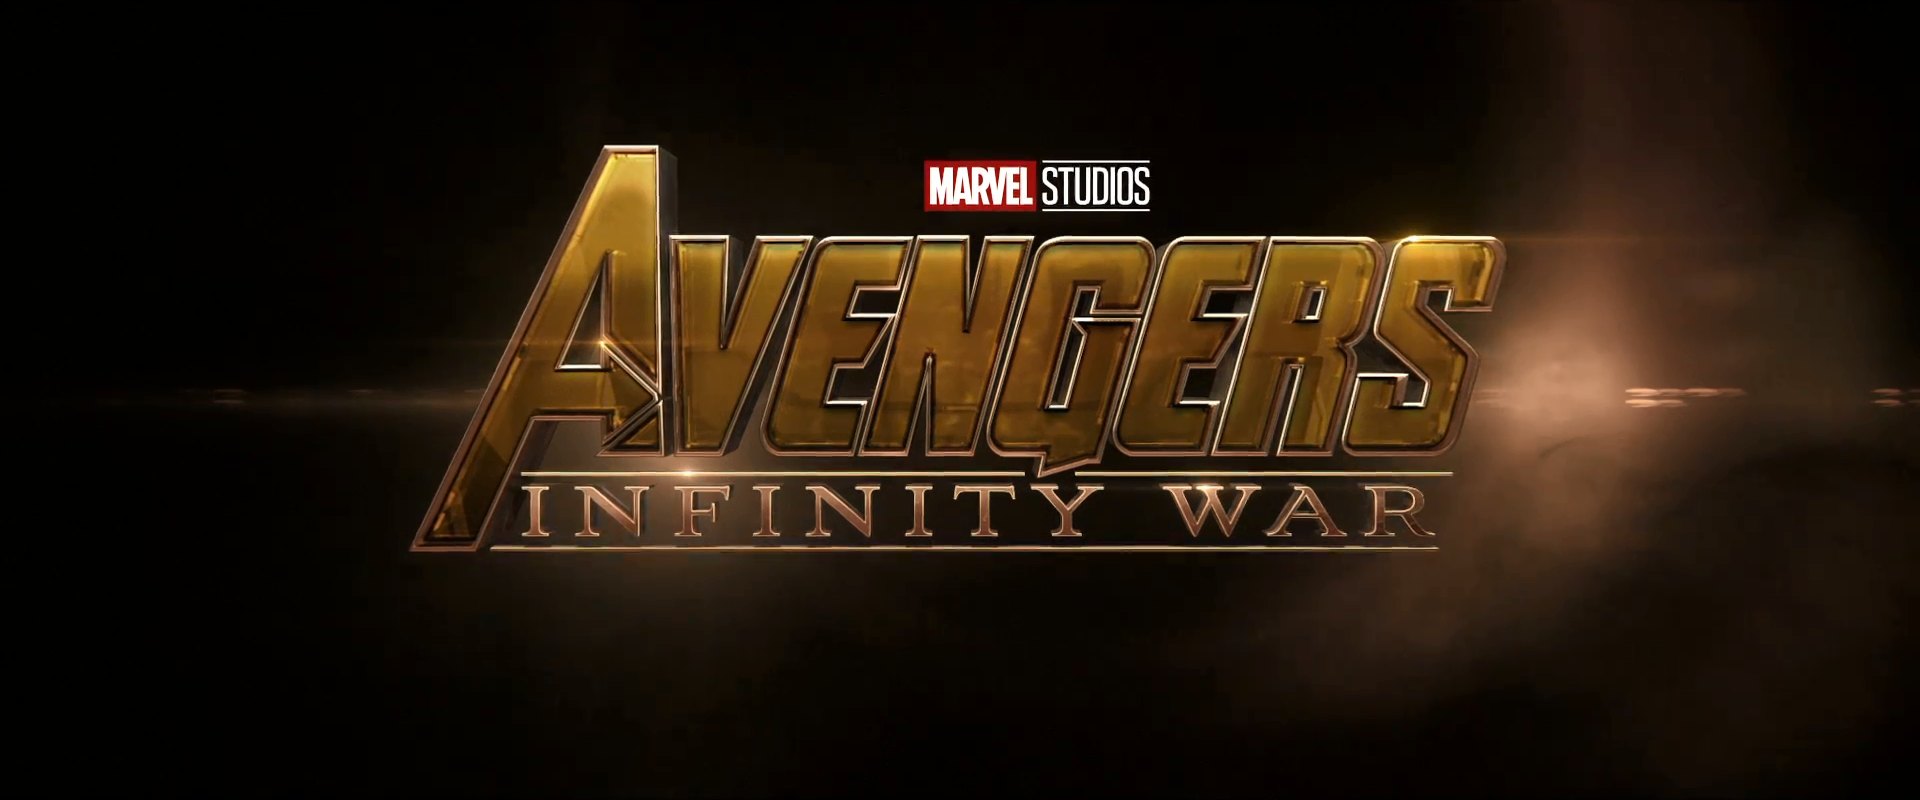 infinity war movie release